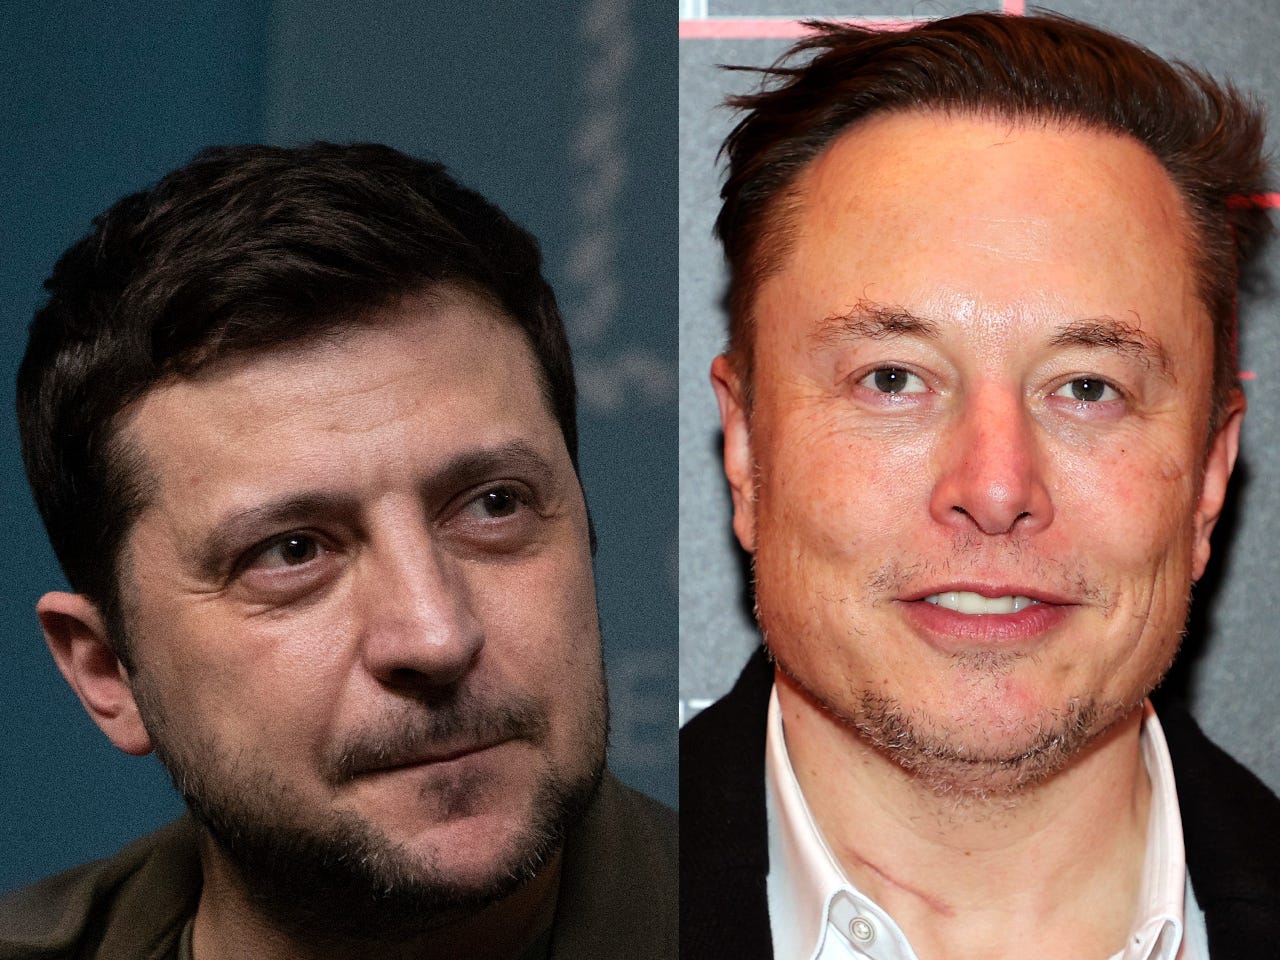 Ukrainian President Volodymyr Zelensky and Tesla CEO Elon Musk.